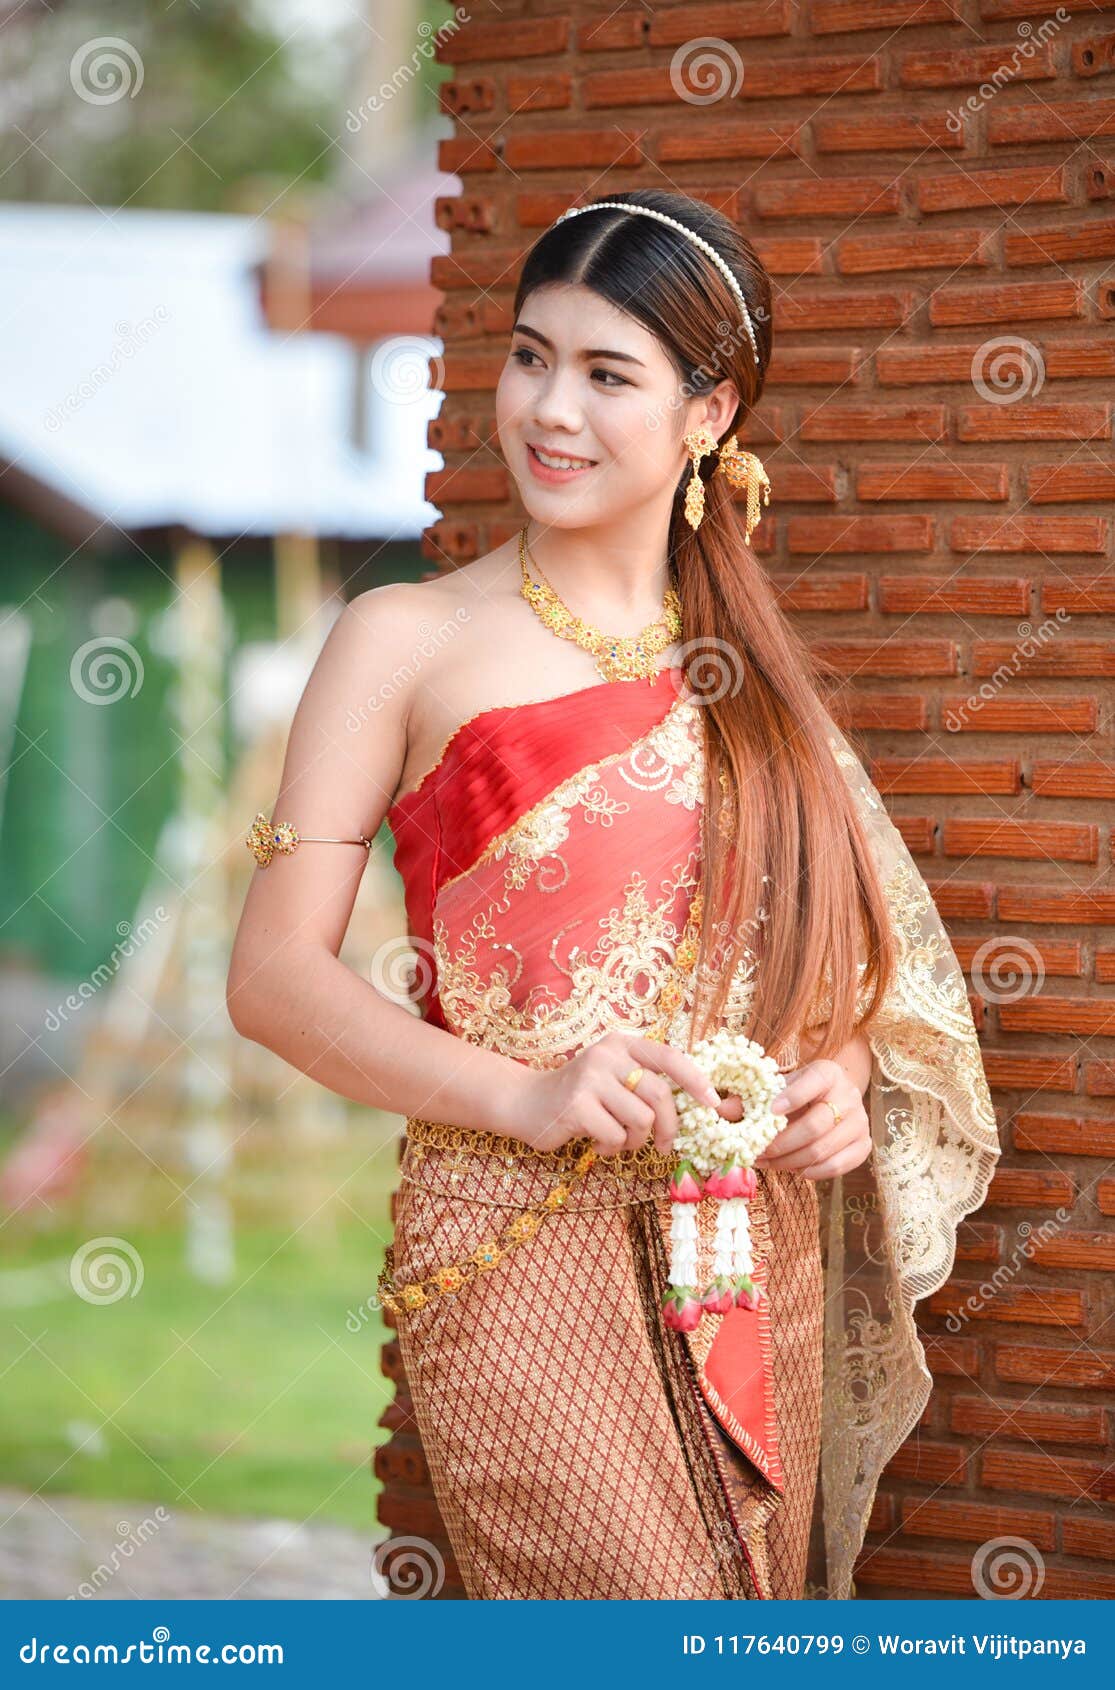 https://thumbs.dreamstime.com/z/beautiful-thai-girl-costume-wearing-bride-dress-asian-woman-traditional-culture-117640799.jpg